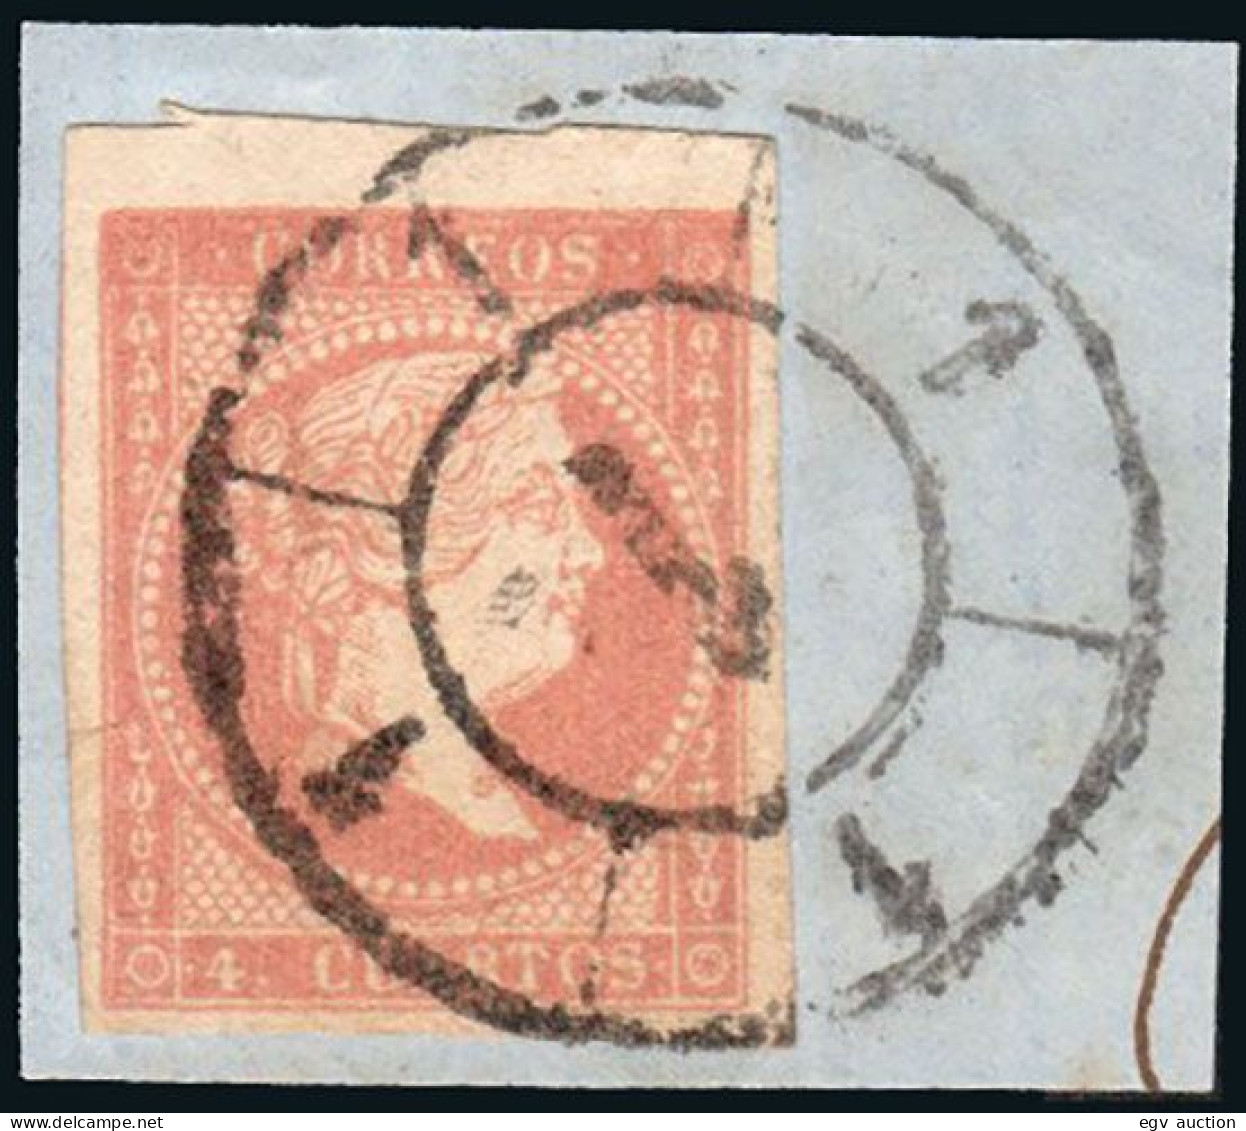 Madrid - Edi O 48 - 4 C.- Fragmento Mat Rueda Carreta "1 - Madrid" - Used Stamps